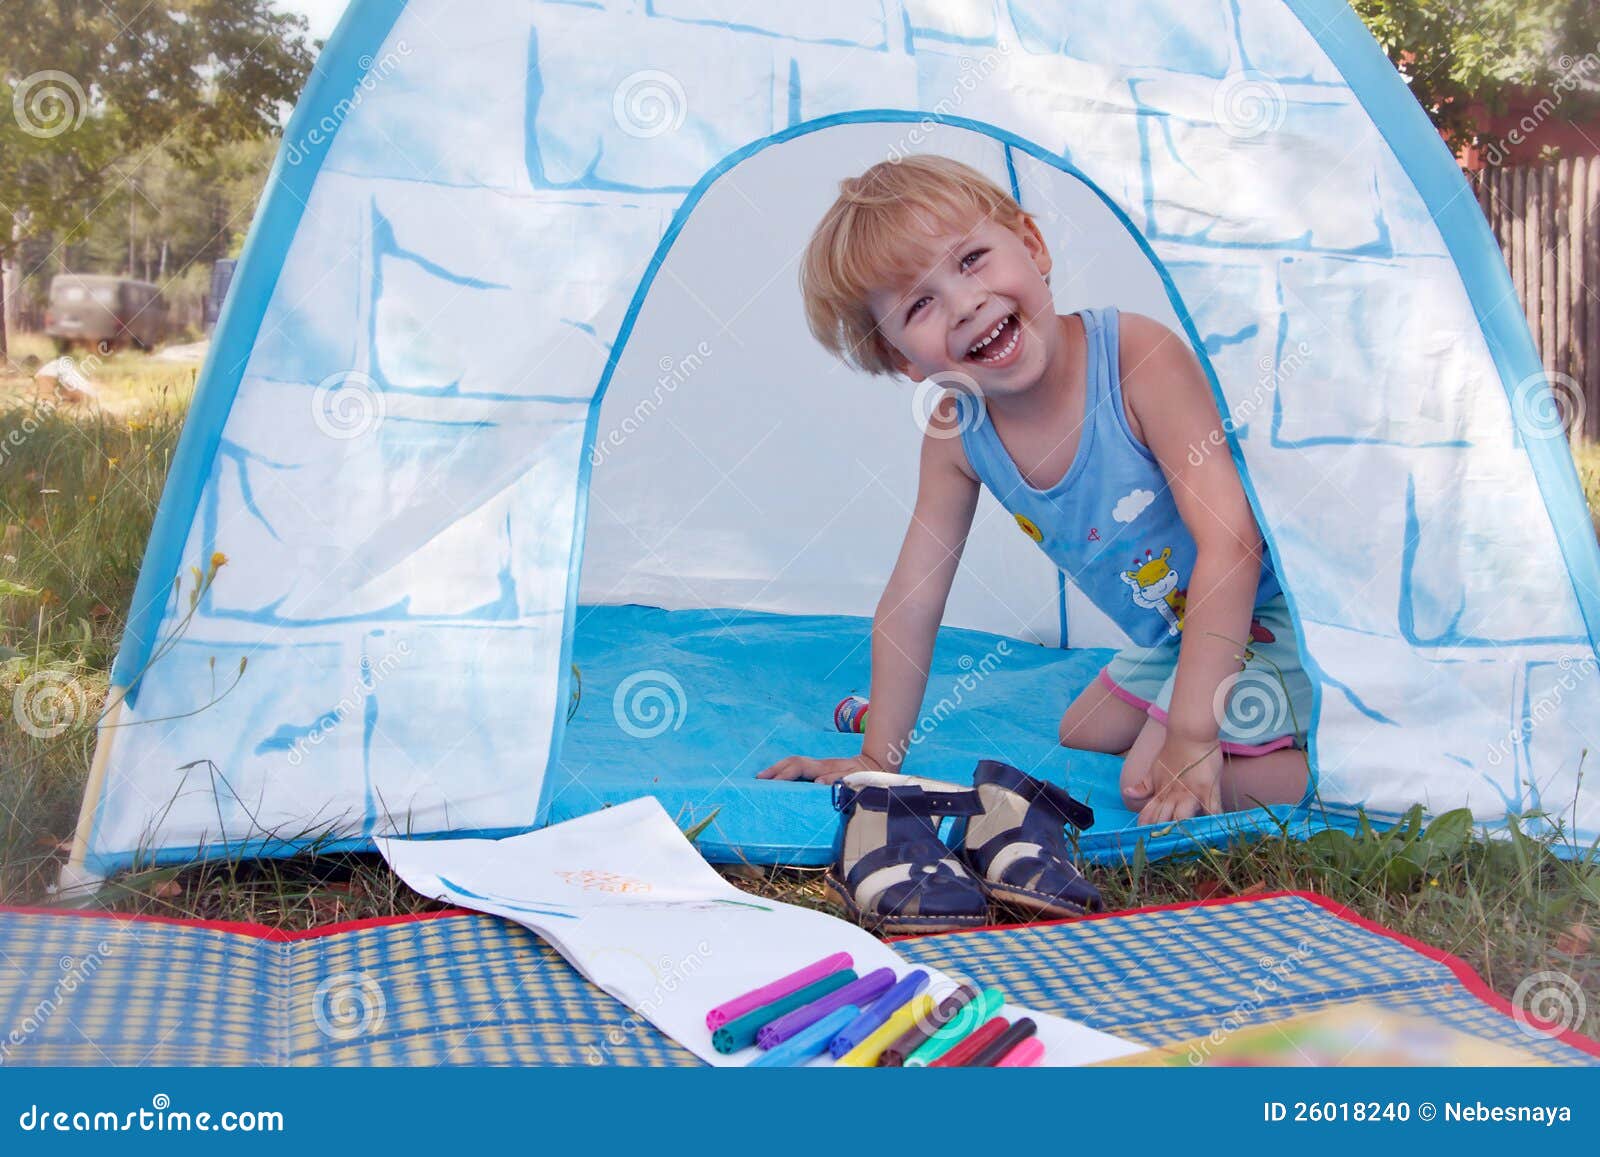 Grondwet operator kaping Child plaing in toy tent stock photo. Image of felt, childhood - 26018240